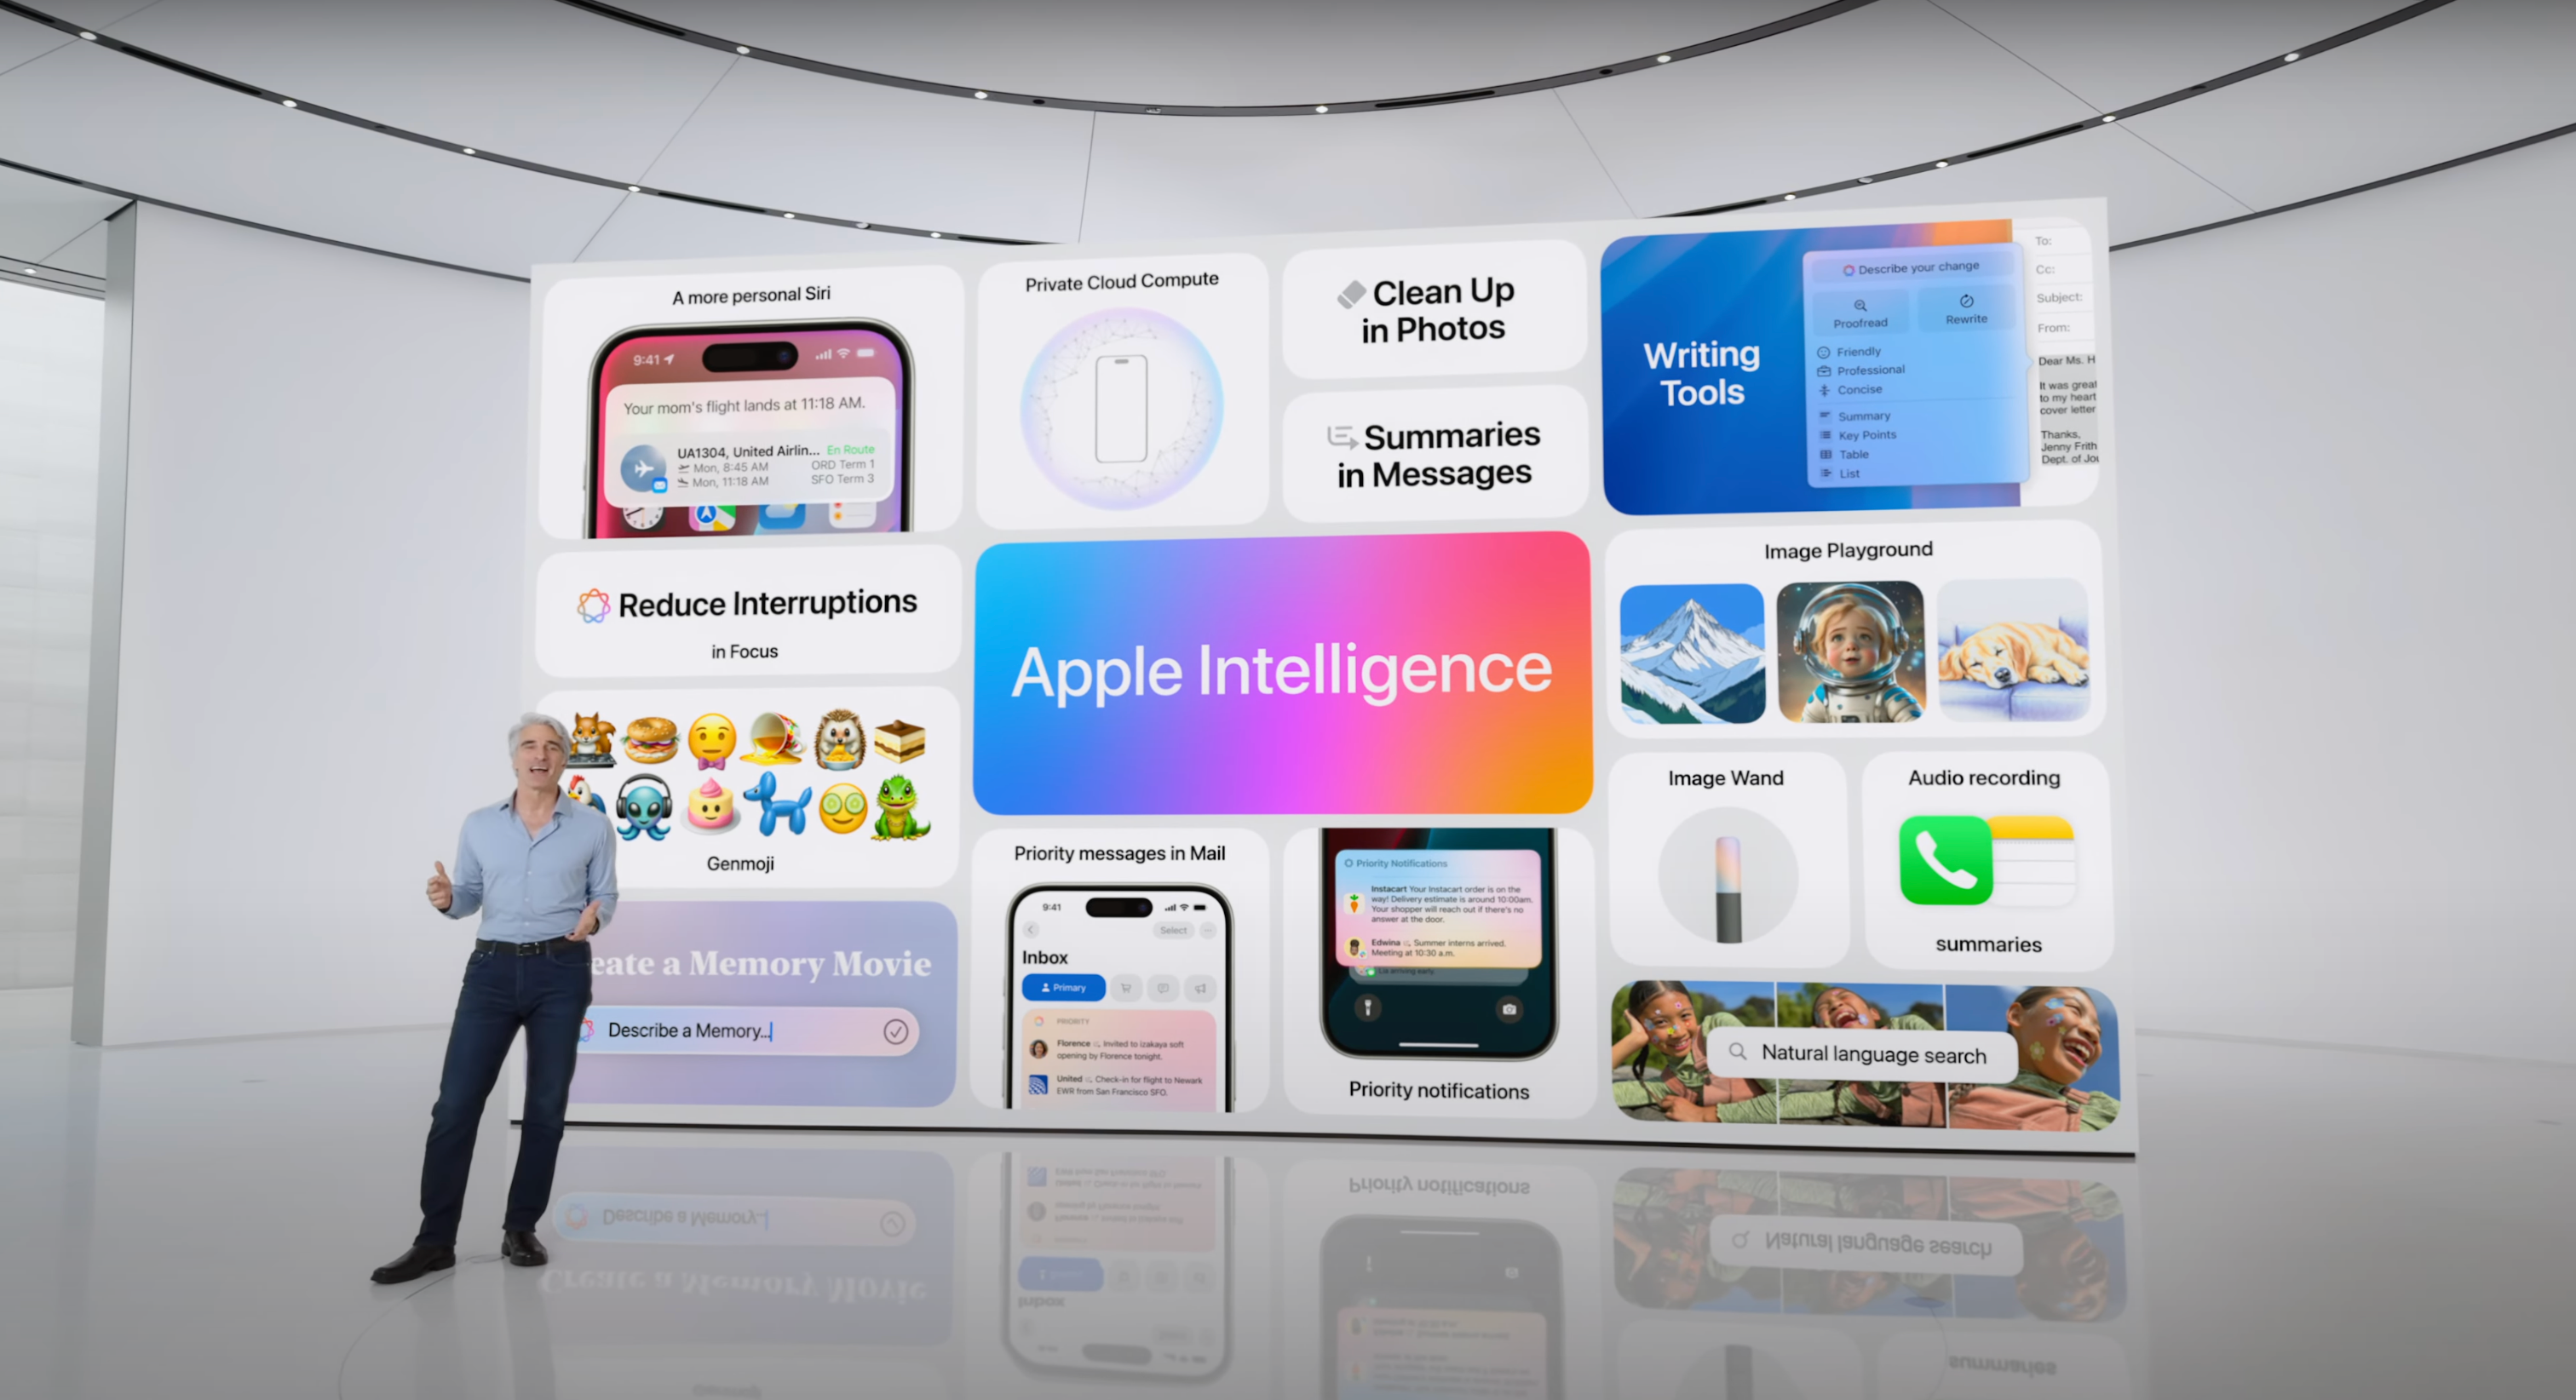 Apple Intelligence summary tiles page